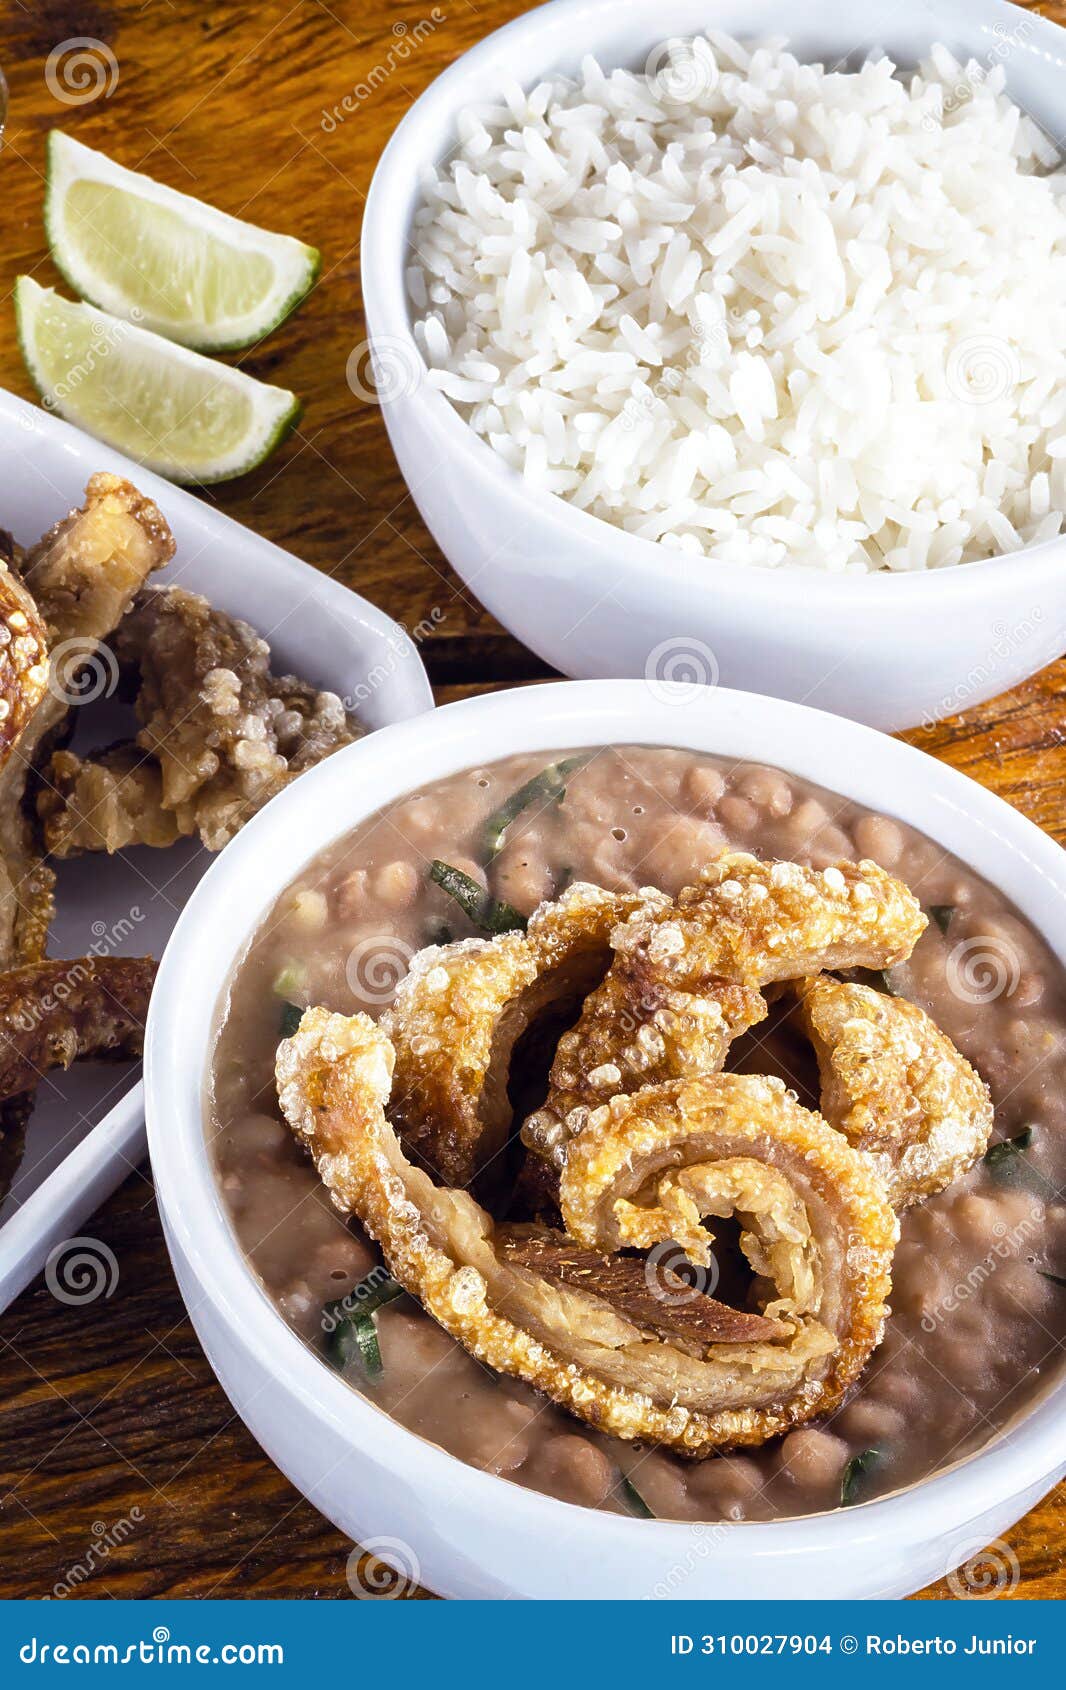 brazilian food - comida mineira - tradicional brazilian food